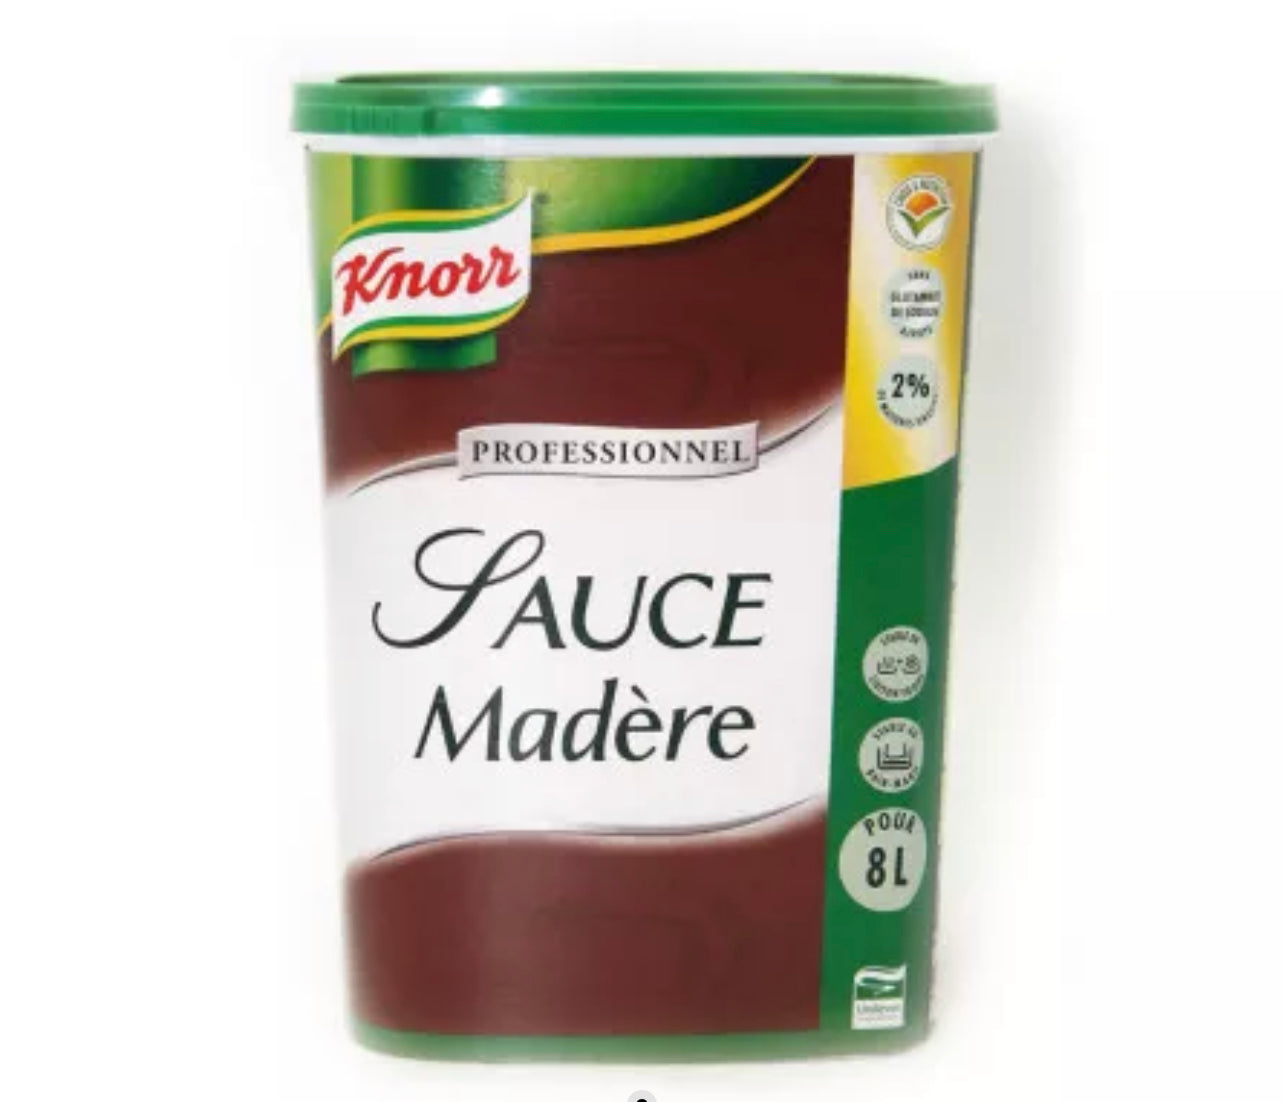 Dehydrated Madeira sauce - 800g